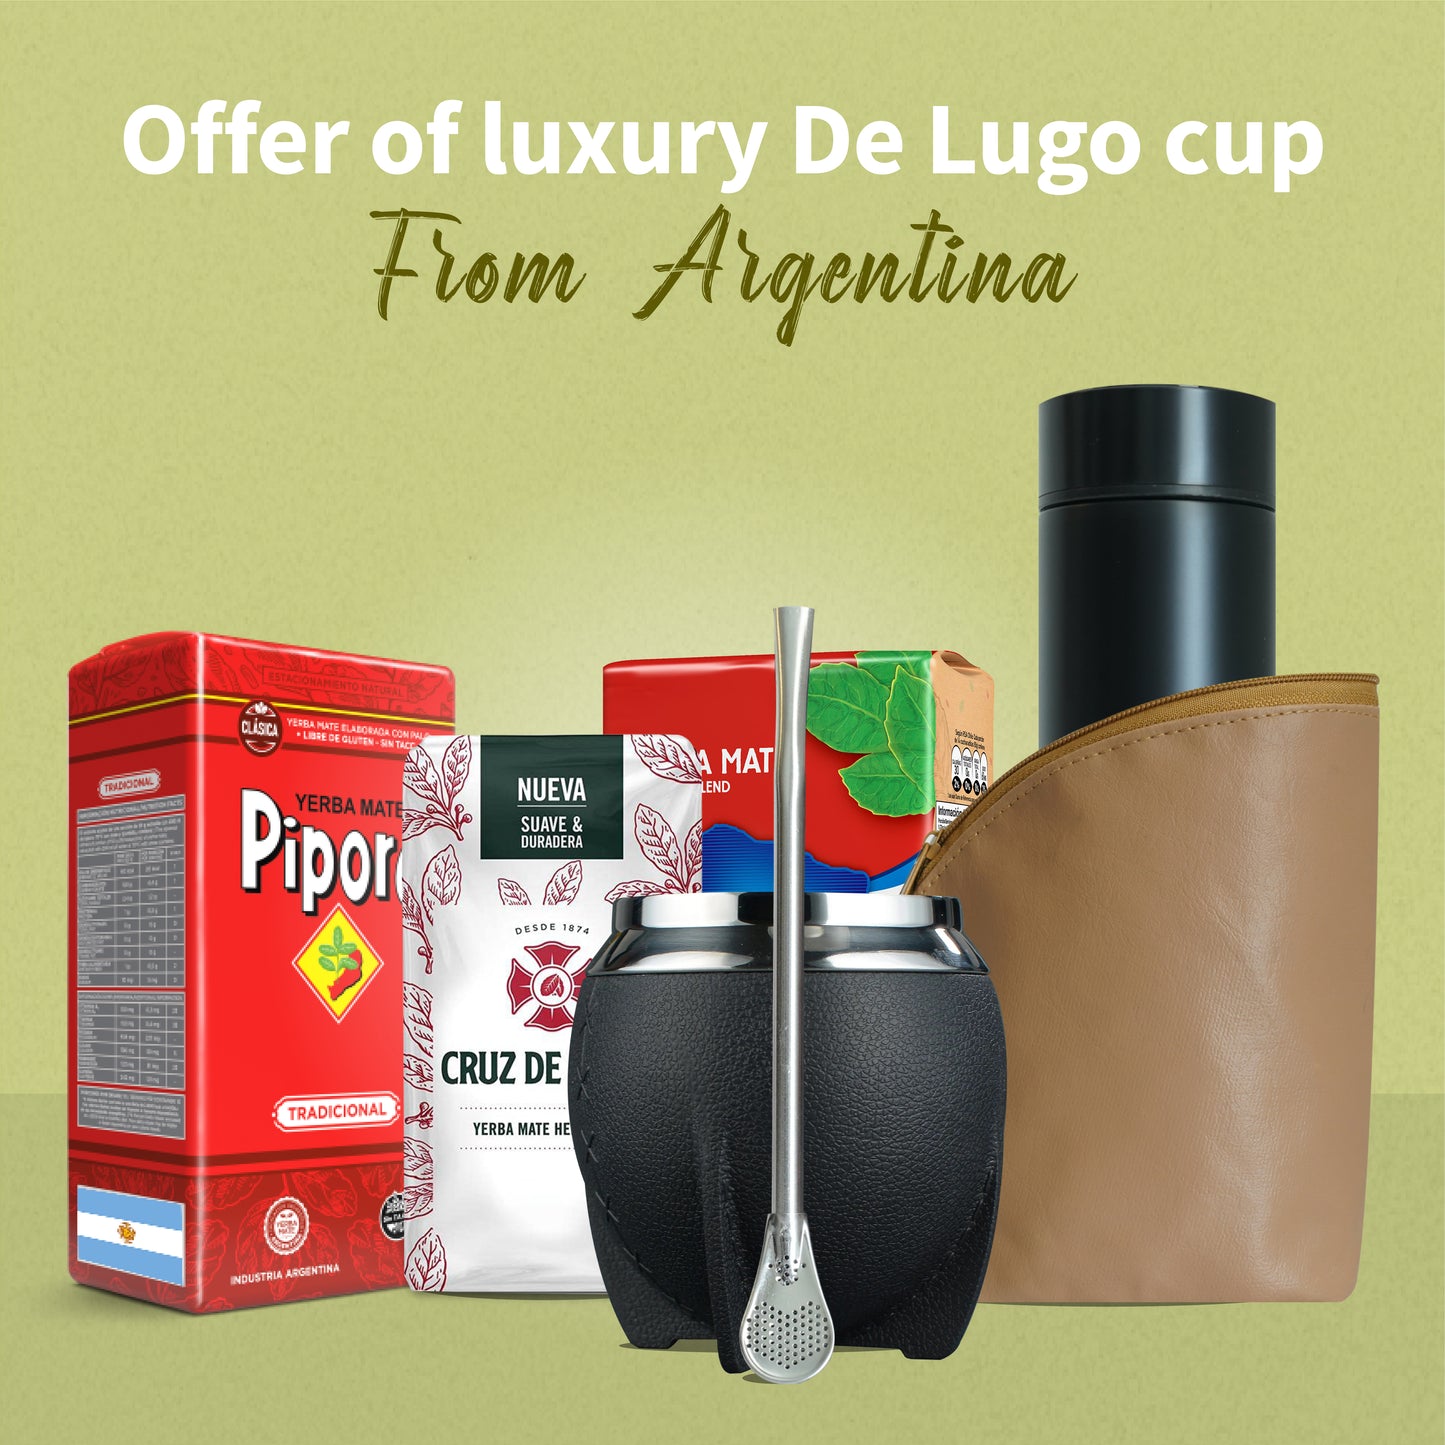 Natural de lugo cup offer